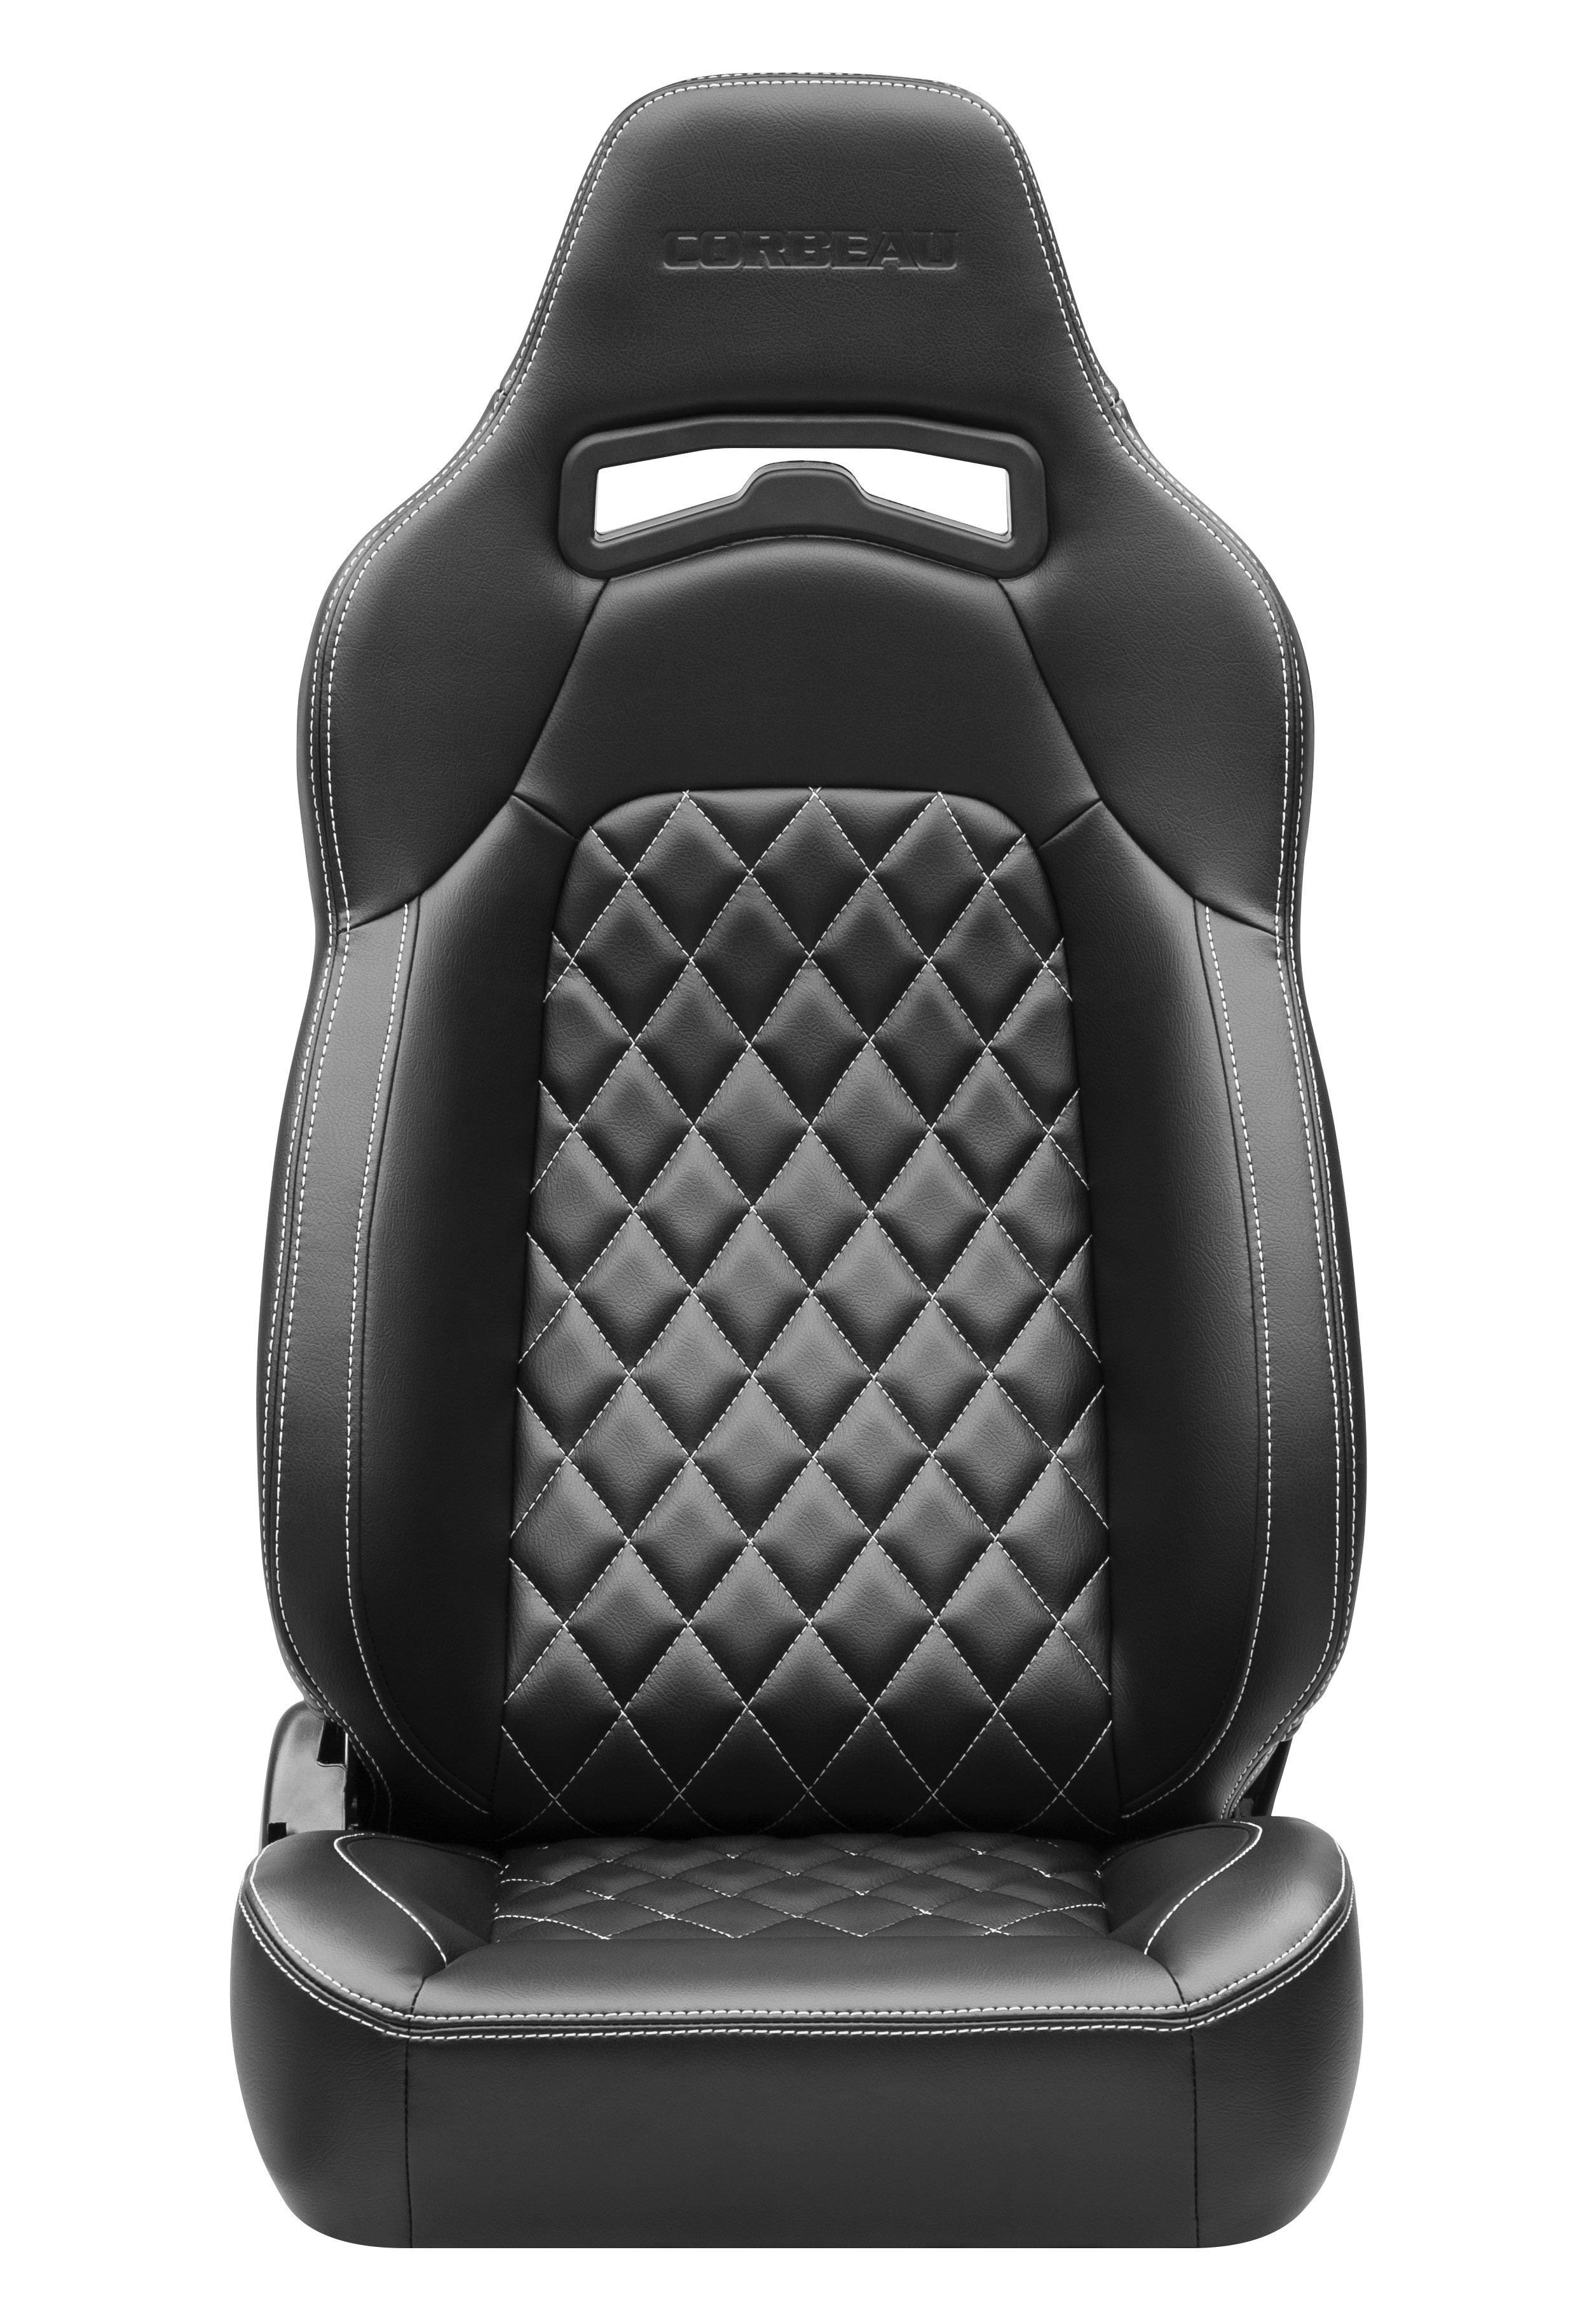 Corbeau Trailcat Racing Seat, Black Vinyl White Diamond Stitch, 44901WPR